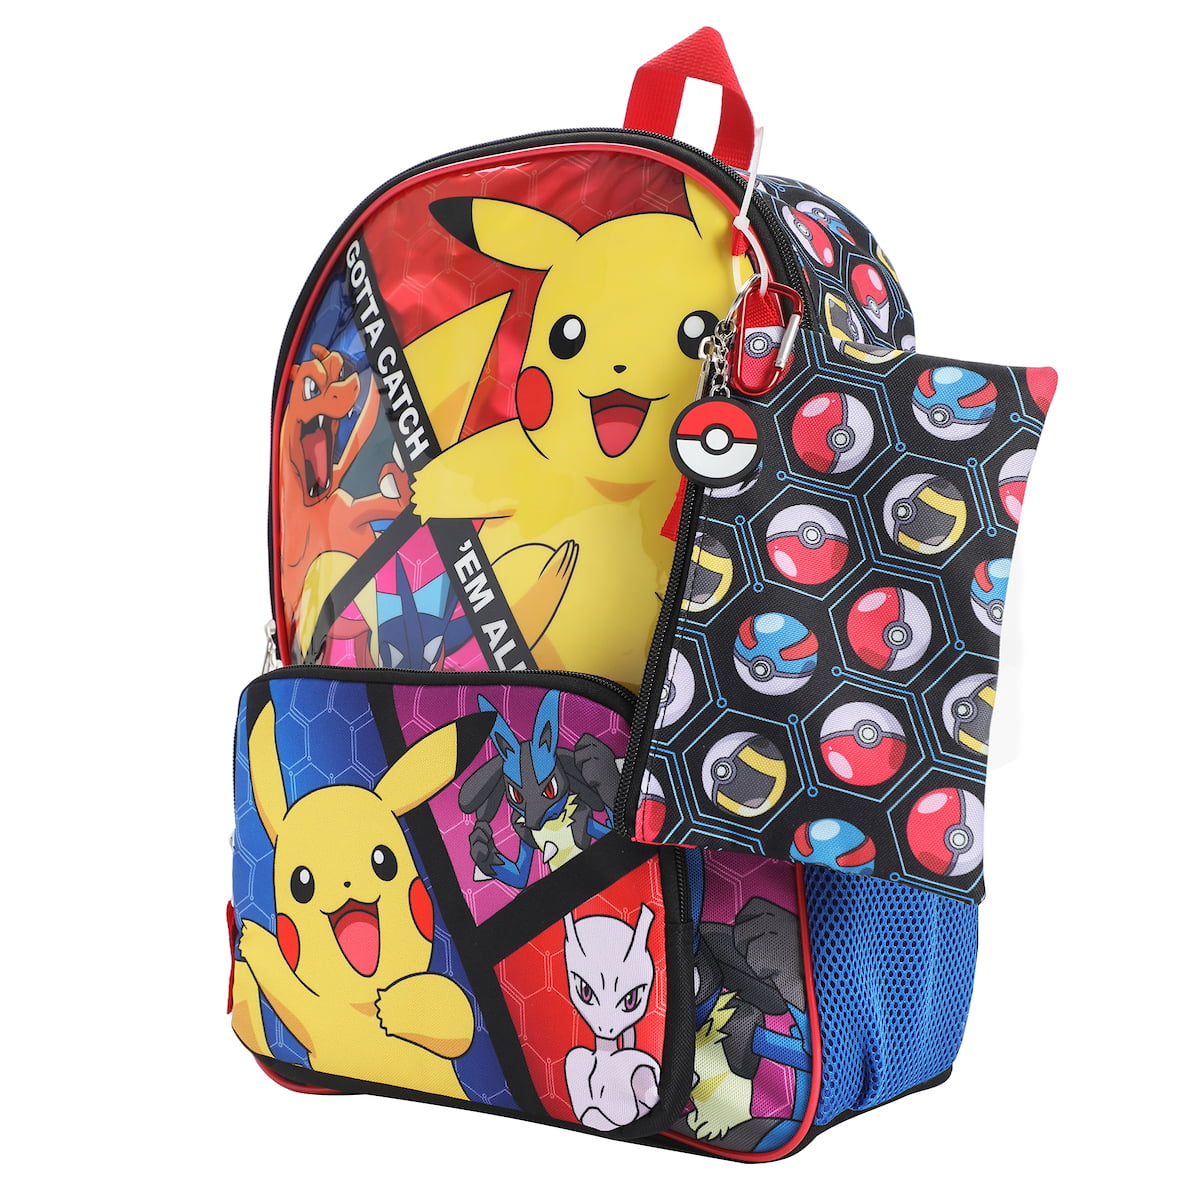 2018 Pokemon Pikachu & Friends Black & Red Lunch Bag Gotta Catch